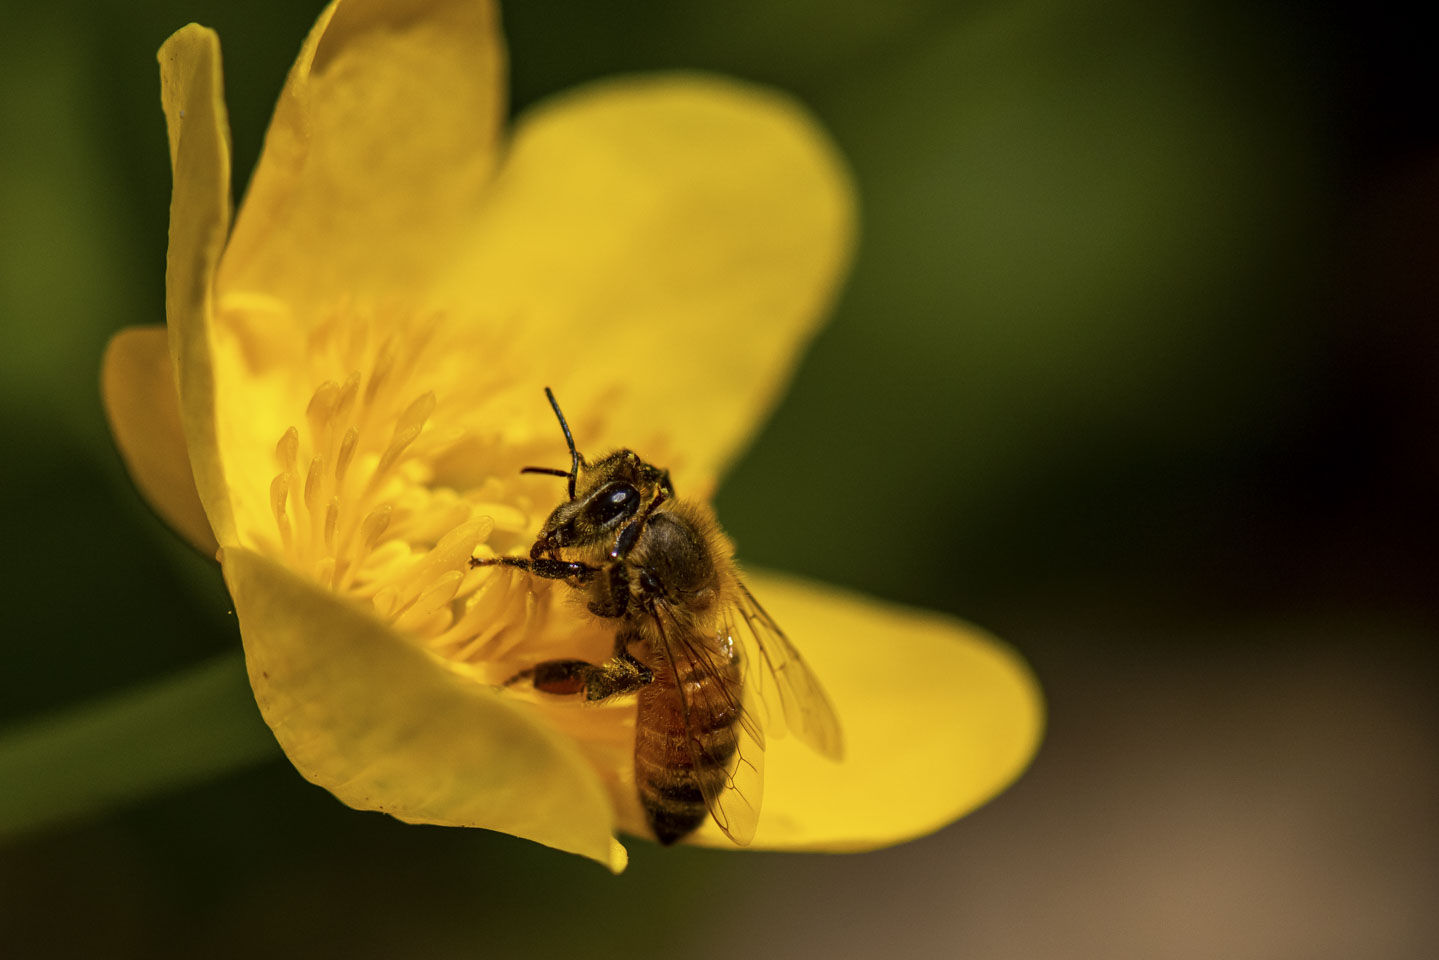 Honeybee on a yellow flower